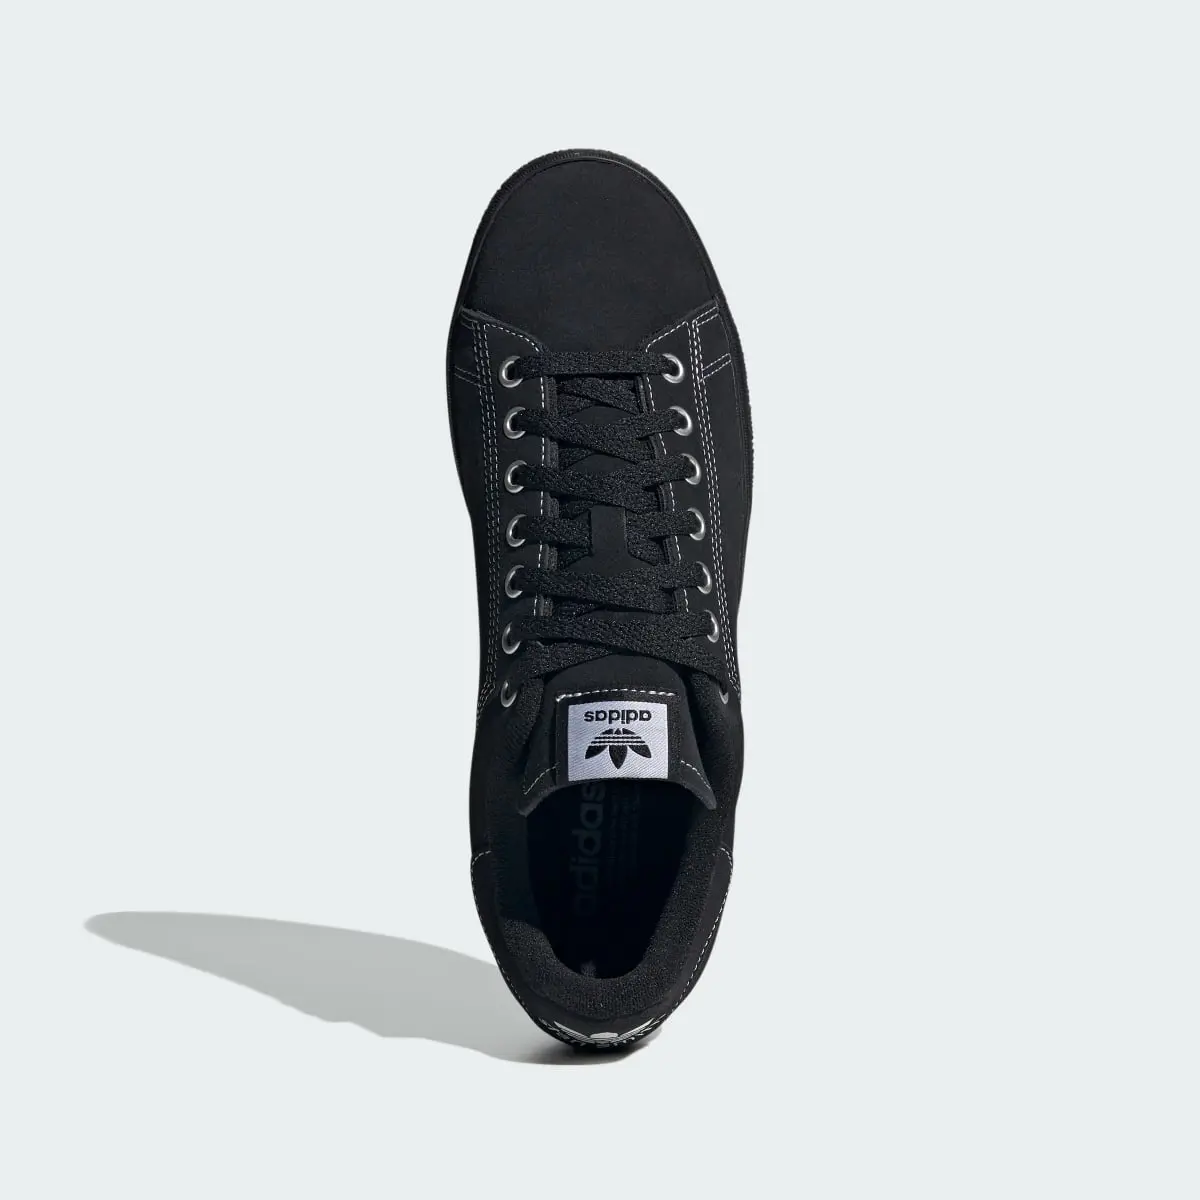 Adidas Stan Smith CS Shoes. 3